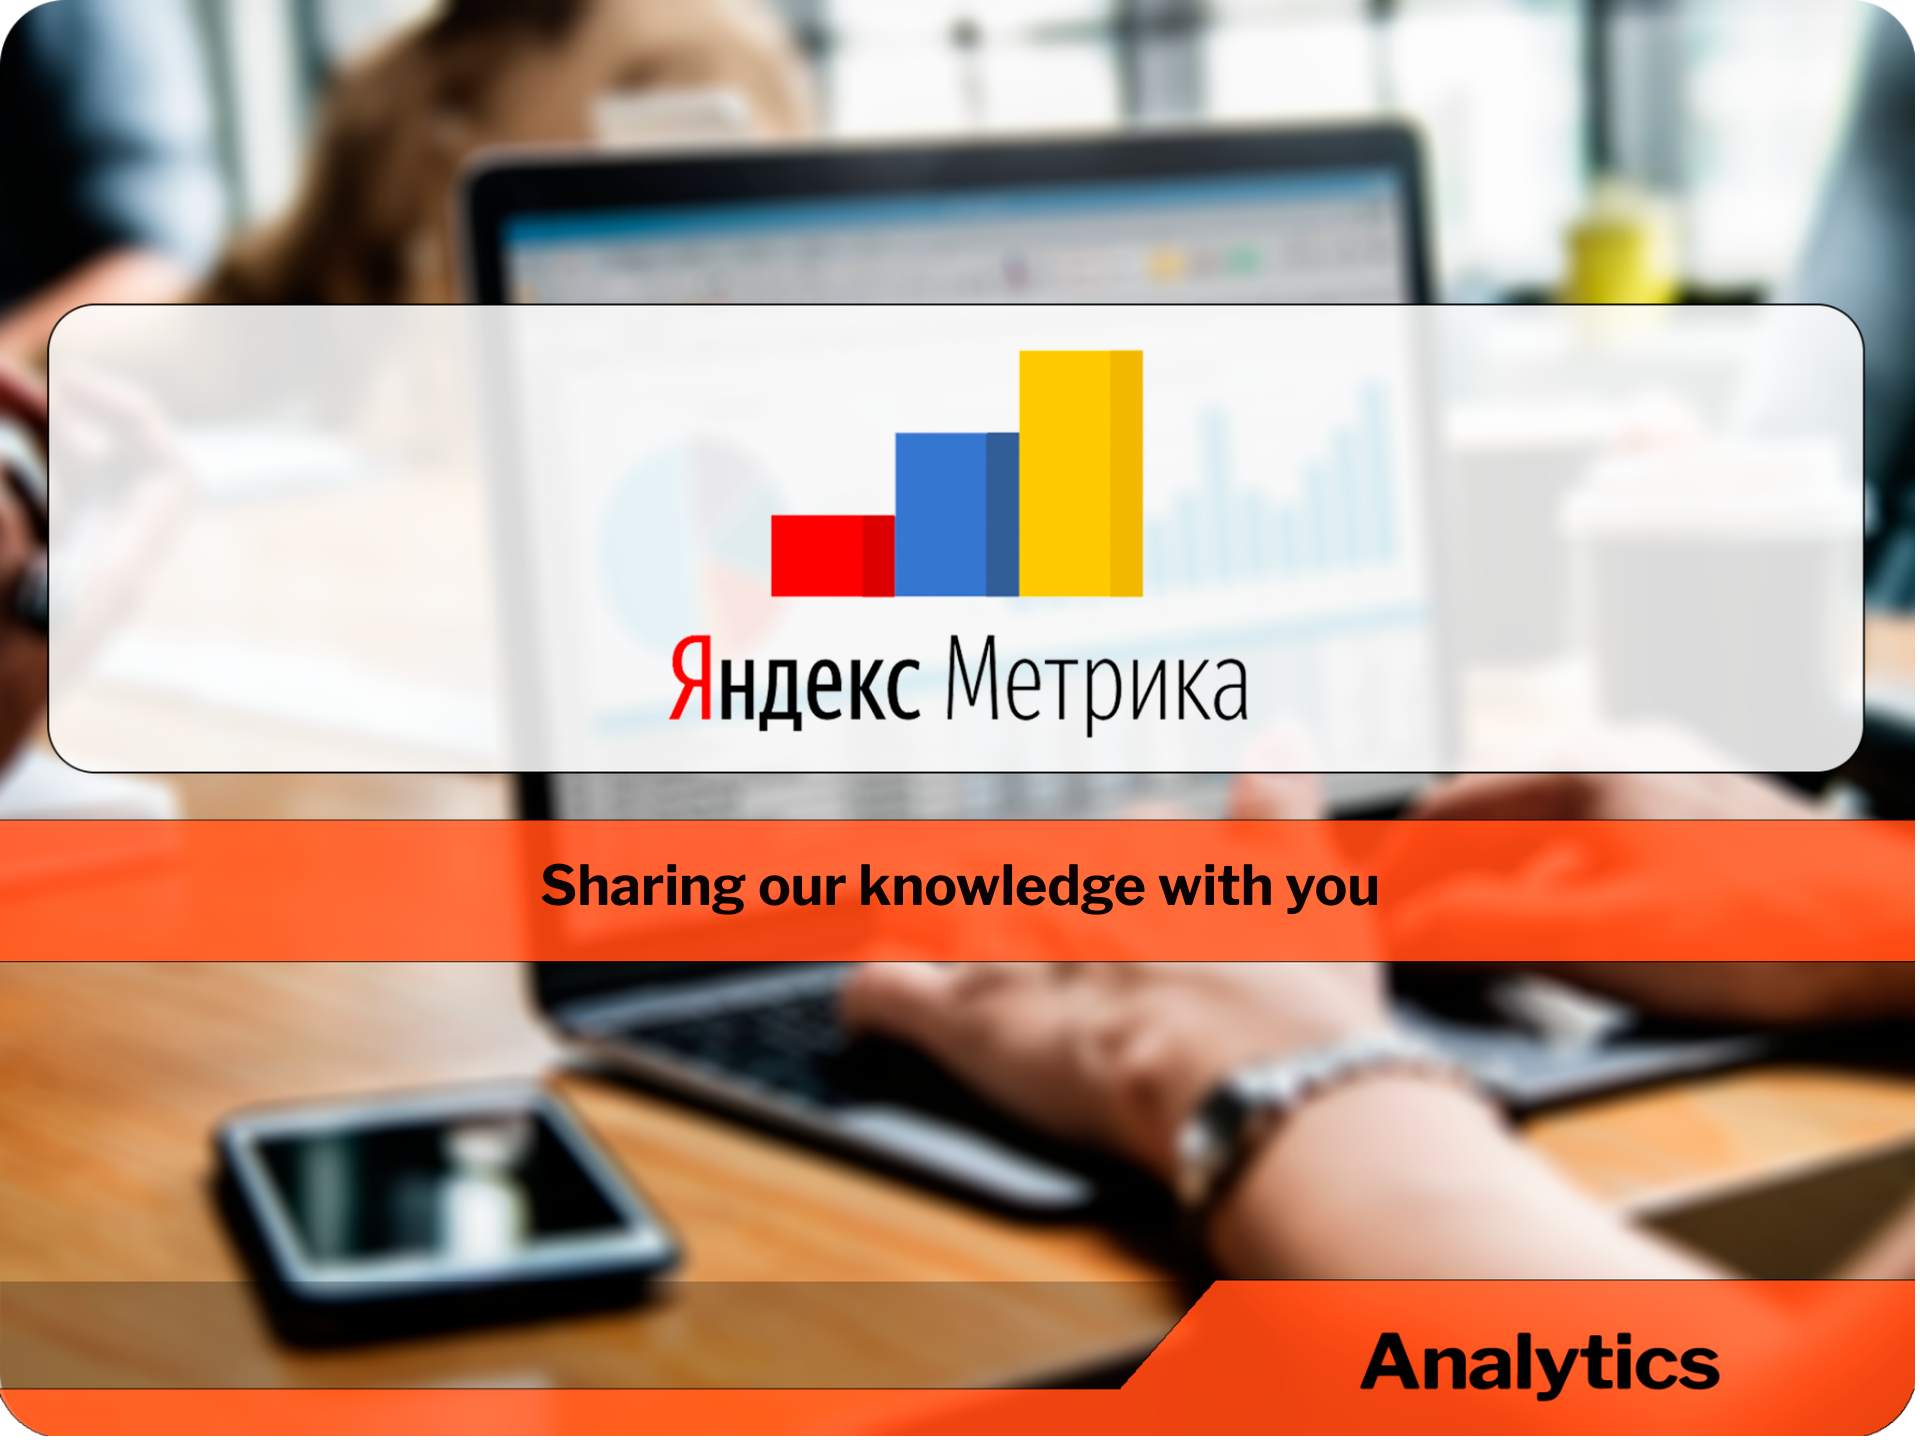 Traffic analysis in Yandex. Metrika: a practical guide